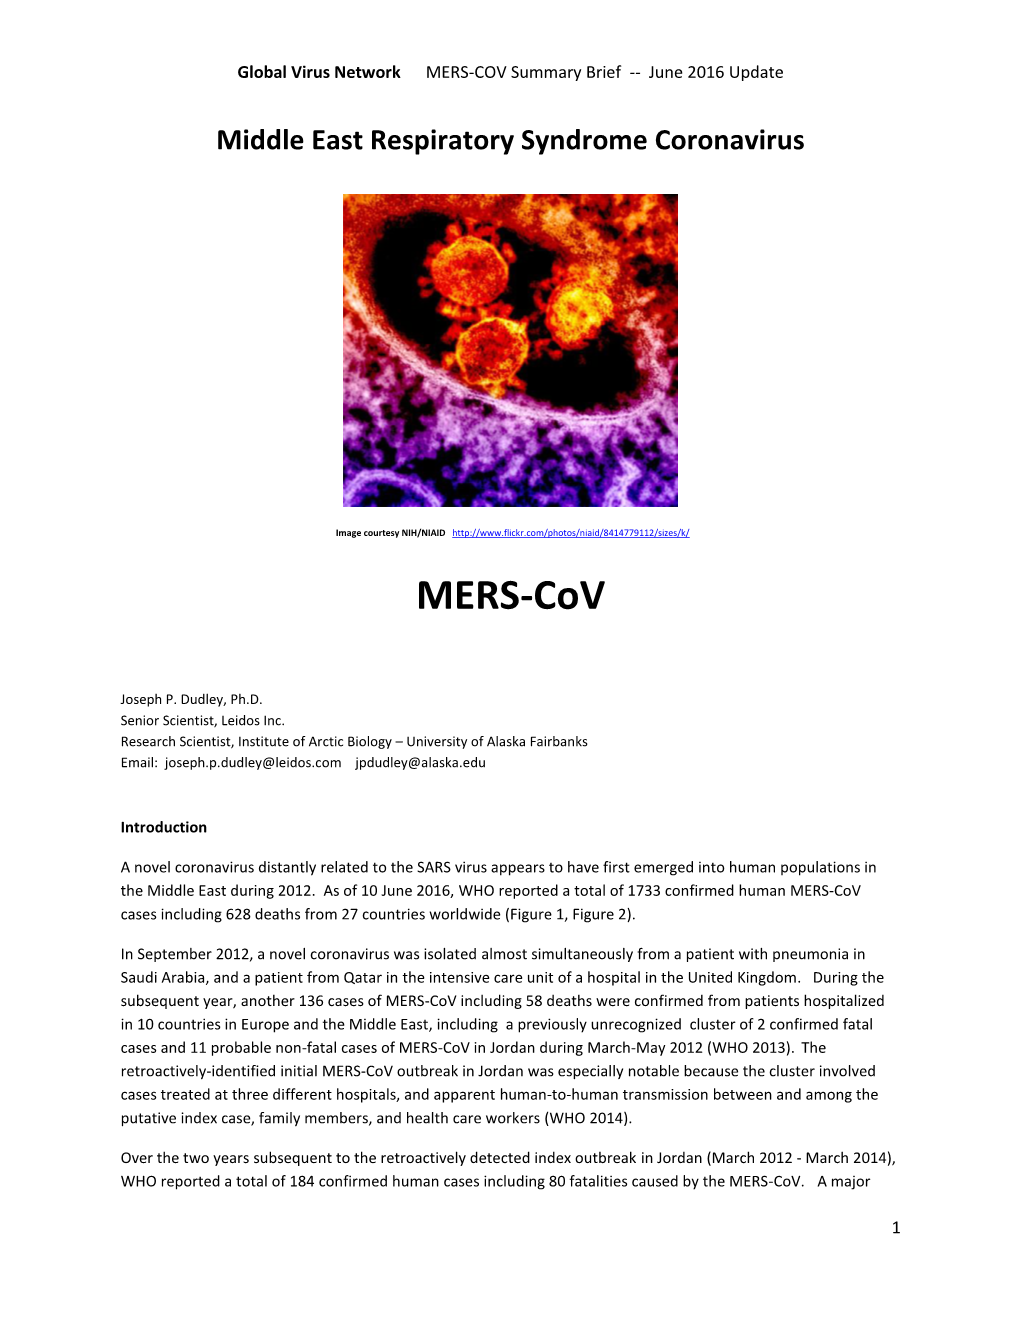 MERS-COV Summary Brief -- June 2016 Update